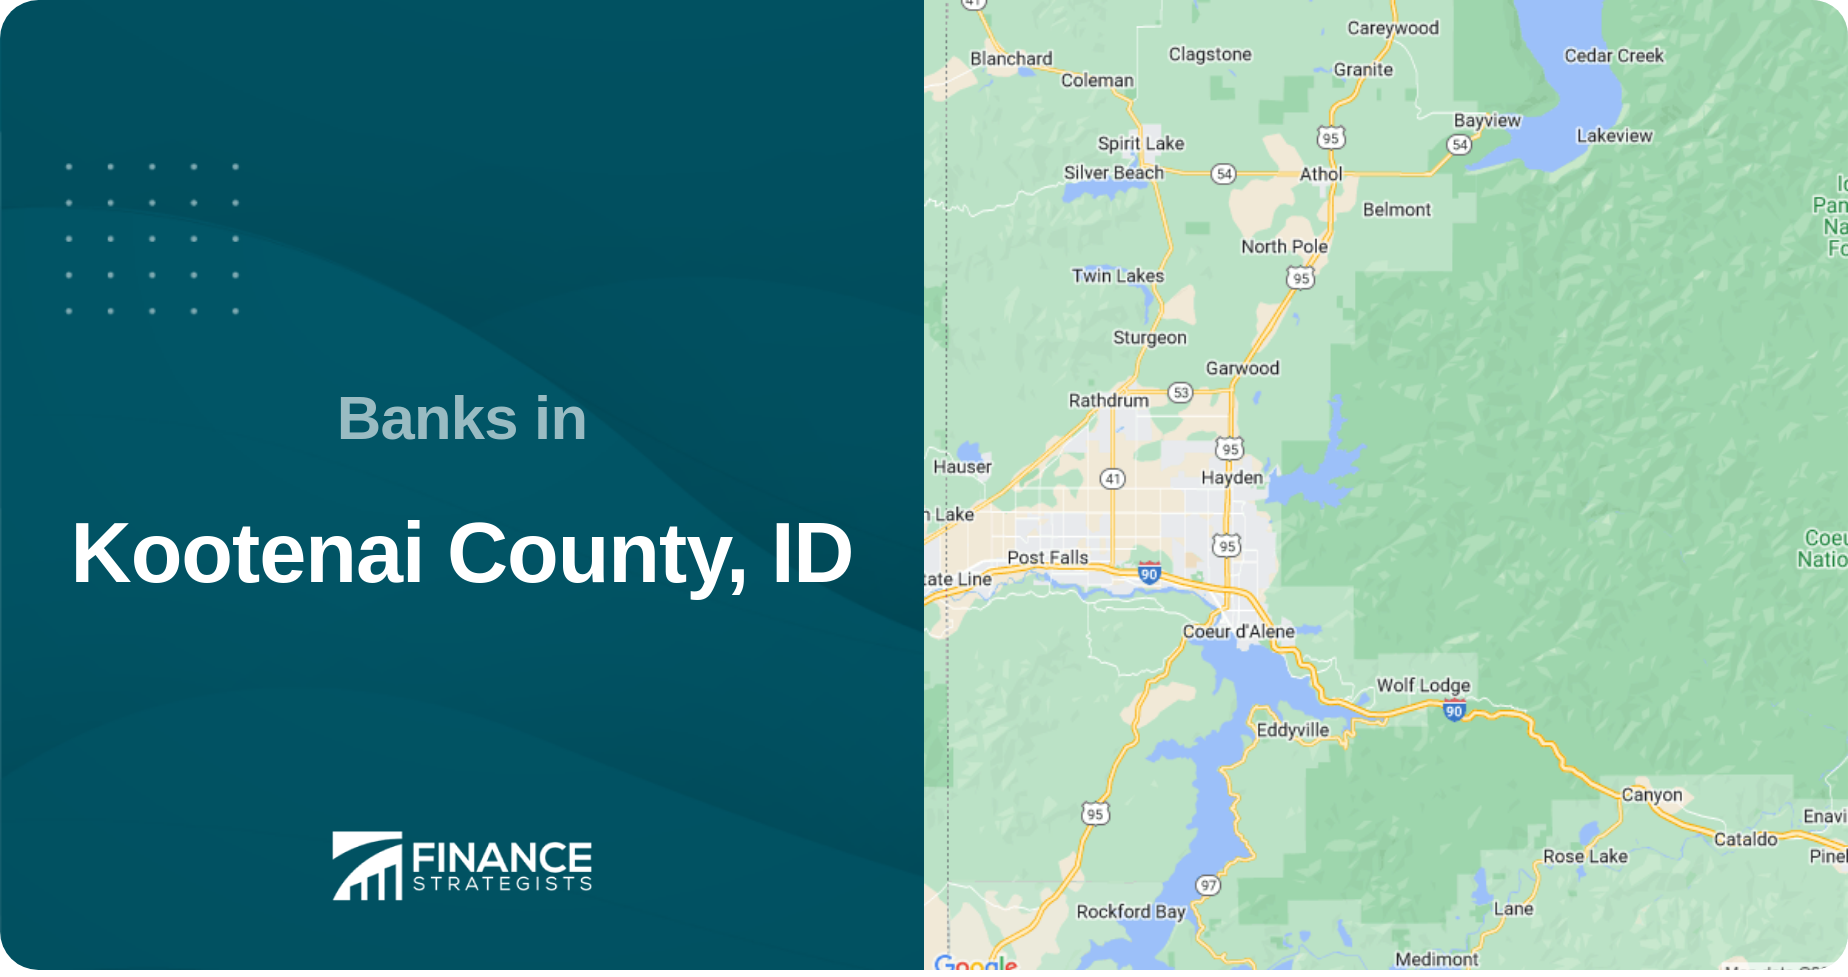 Banks in Kootenai County, ID